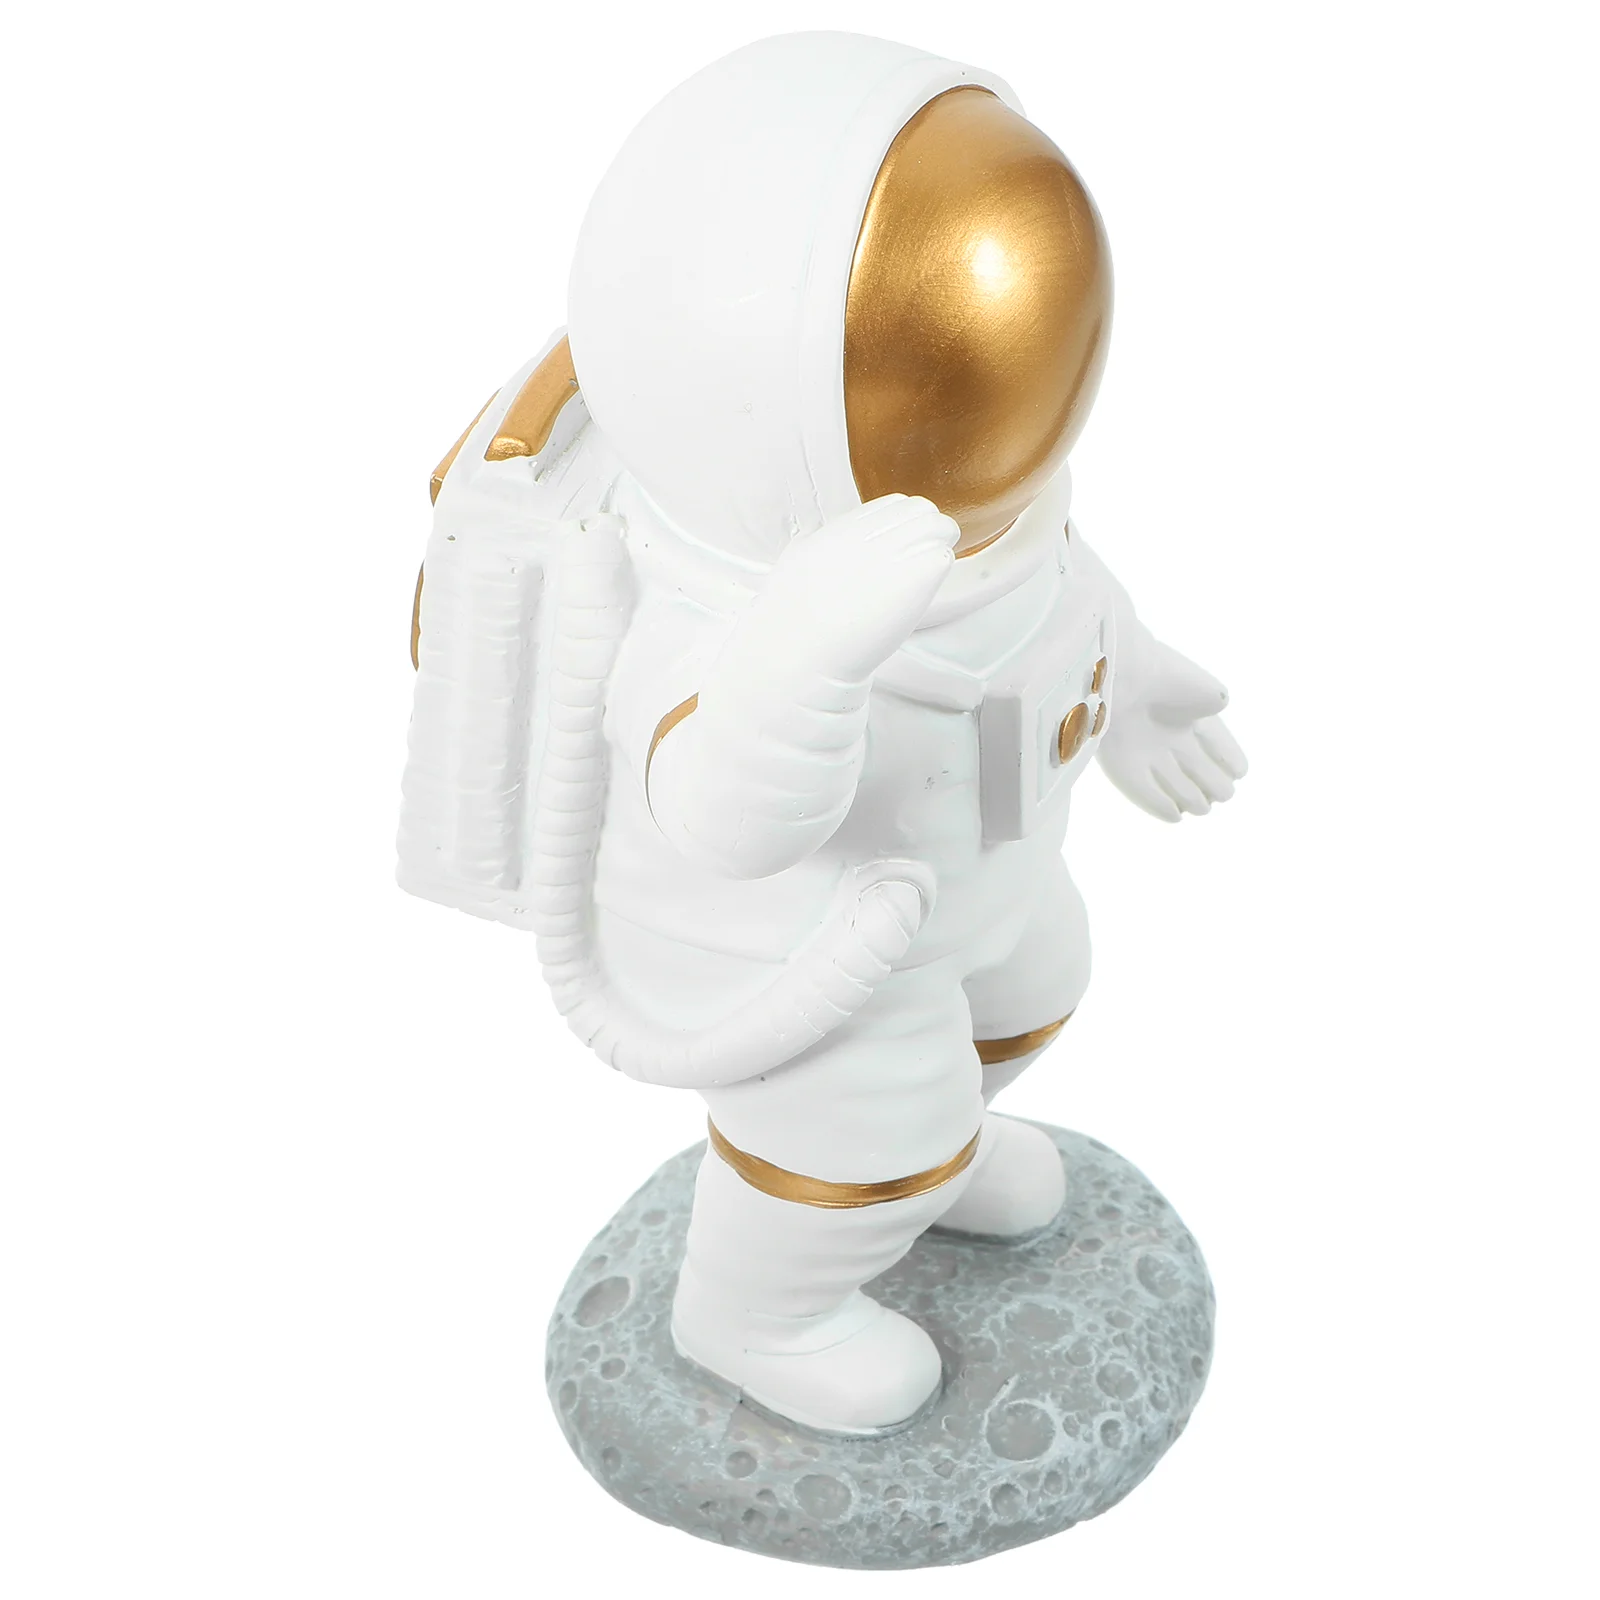 

Astronaut Ornaments Kid Presents Sculptures Statues Desk Children Gifts Resin Model Spaceman Figurine